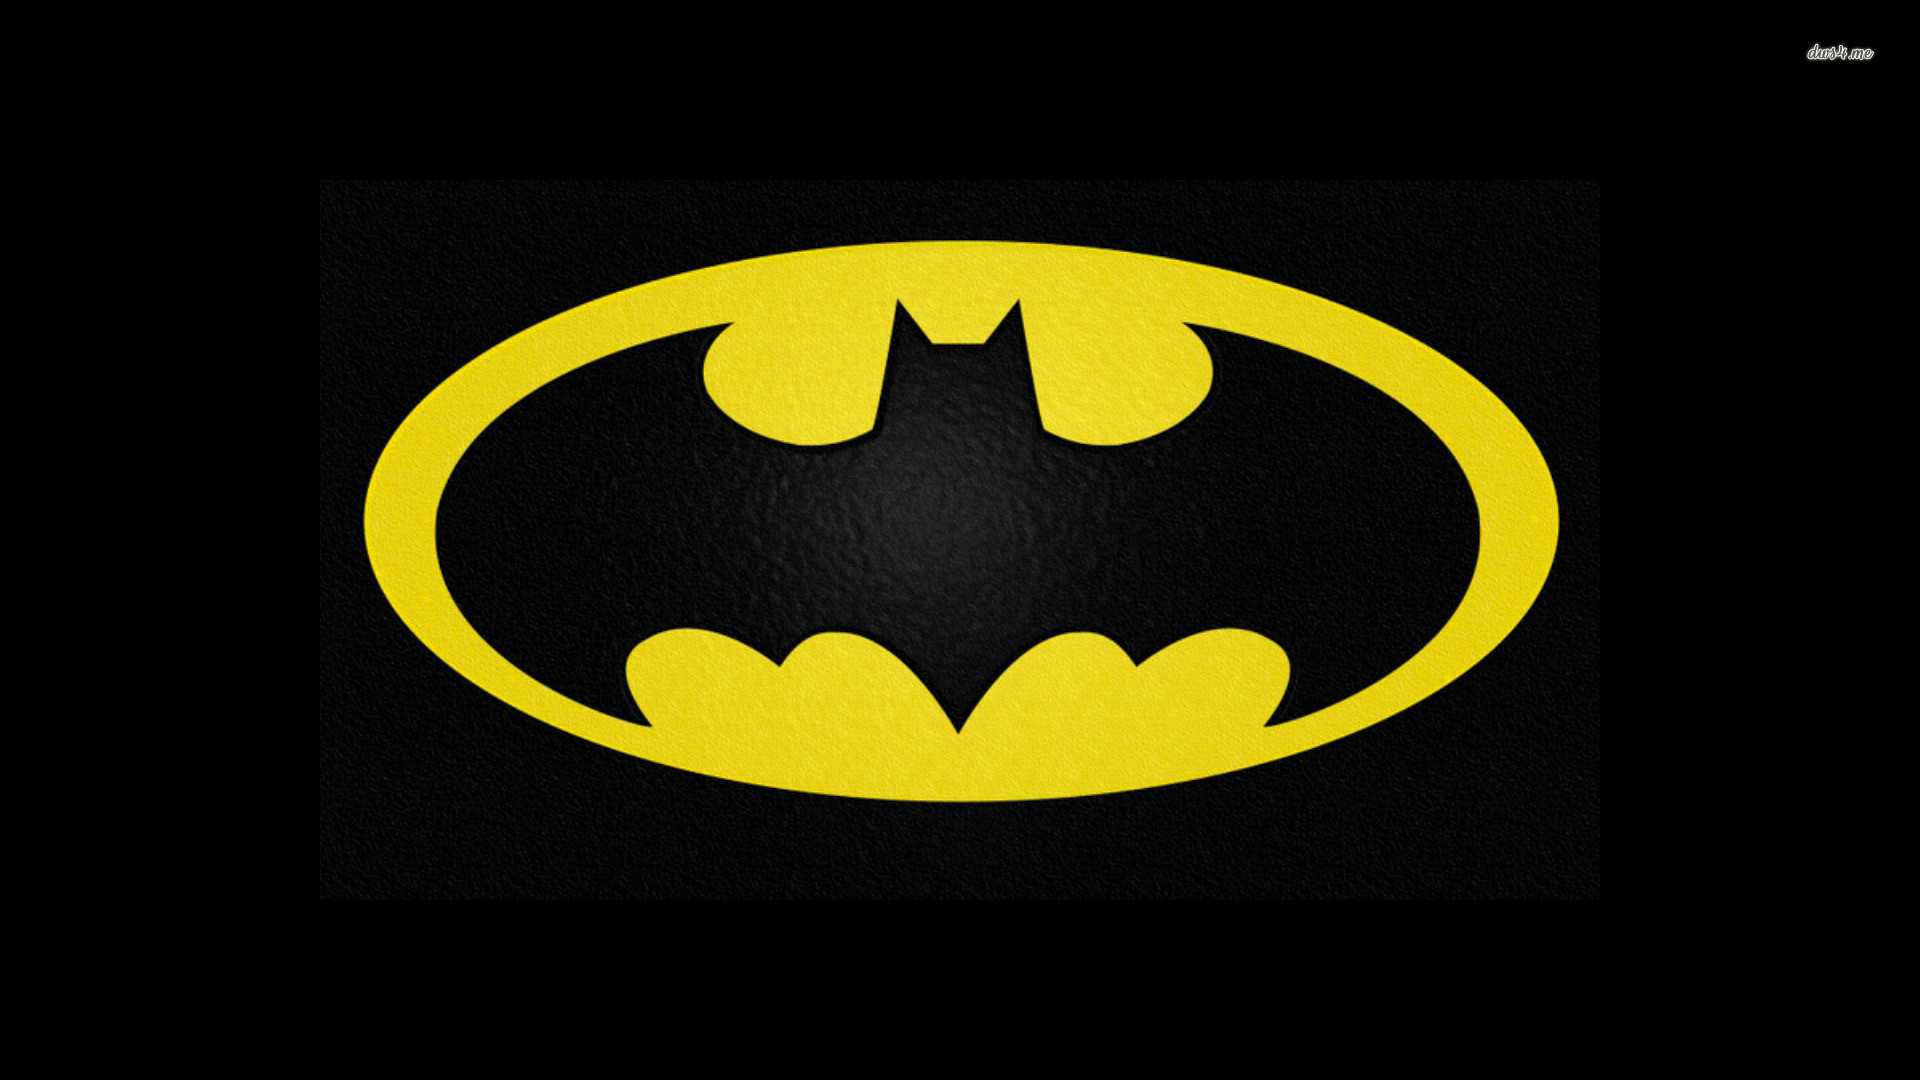 Batman logo wallpaper – Movie wallpapers –